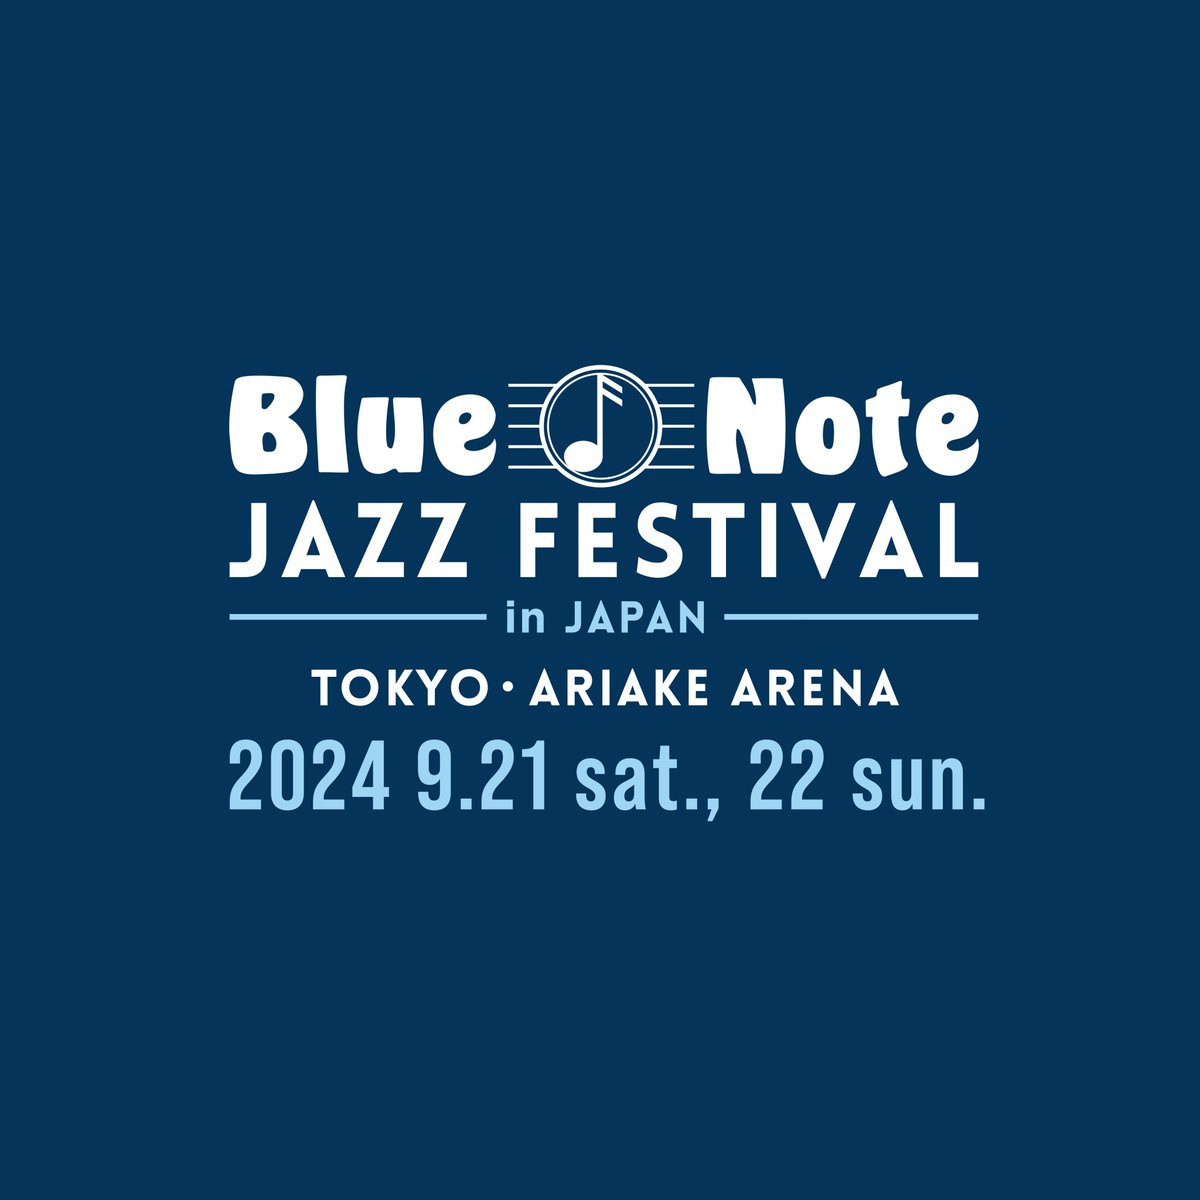 🎹Blue Note JAZZ FESTIVAL in JAPAN 2024🎹
開催決定🎺

詳細は近日発表！

bluenotejazzfestival.jp

#BNJF2024